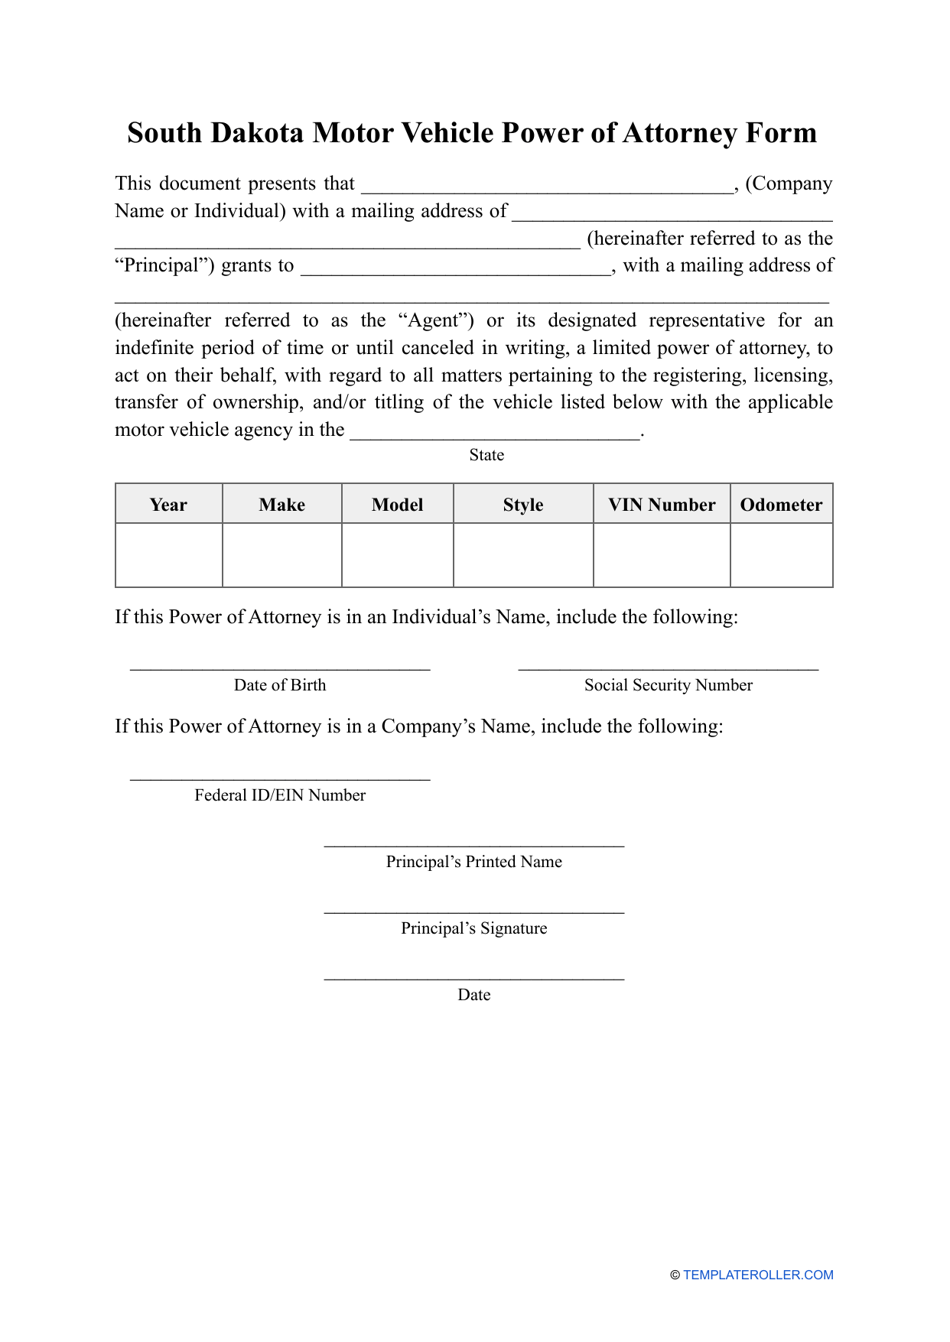 Motor Vehicle Power of Attorney Form - South Dakota, Page 1